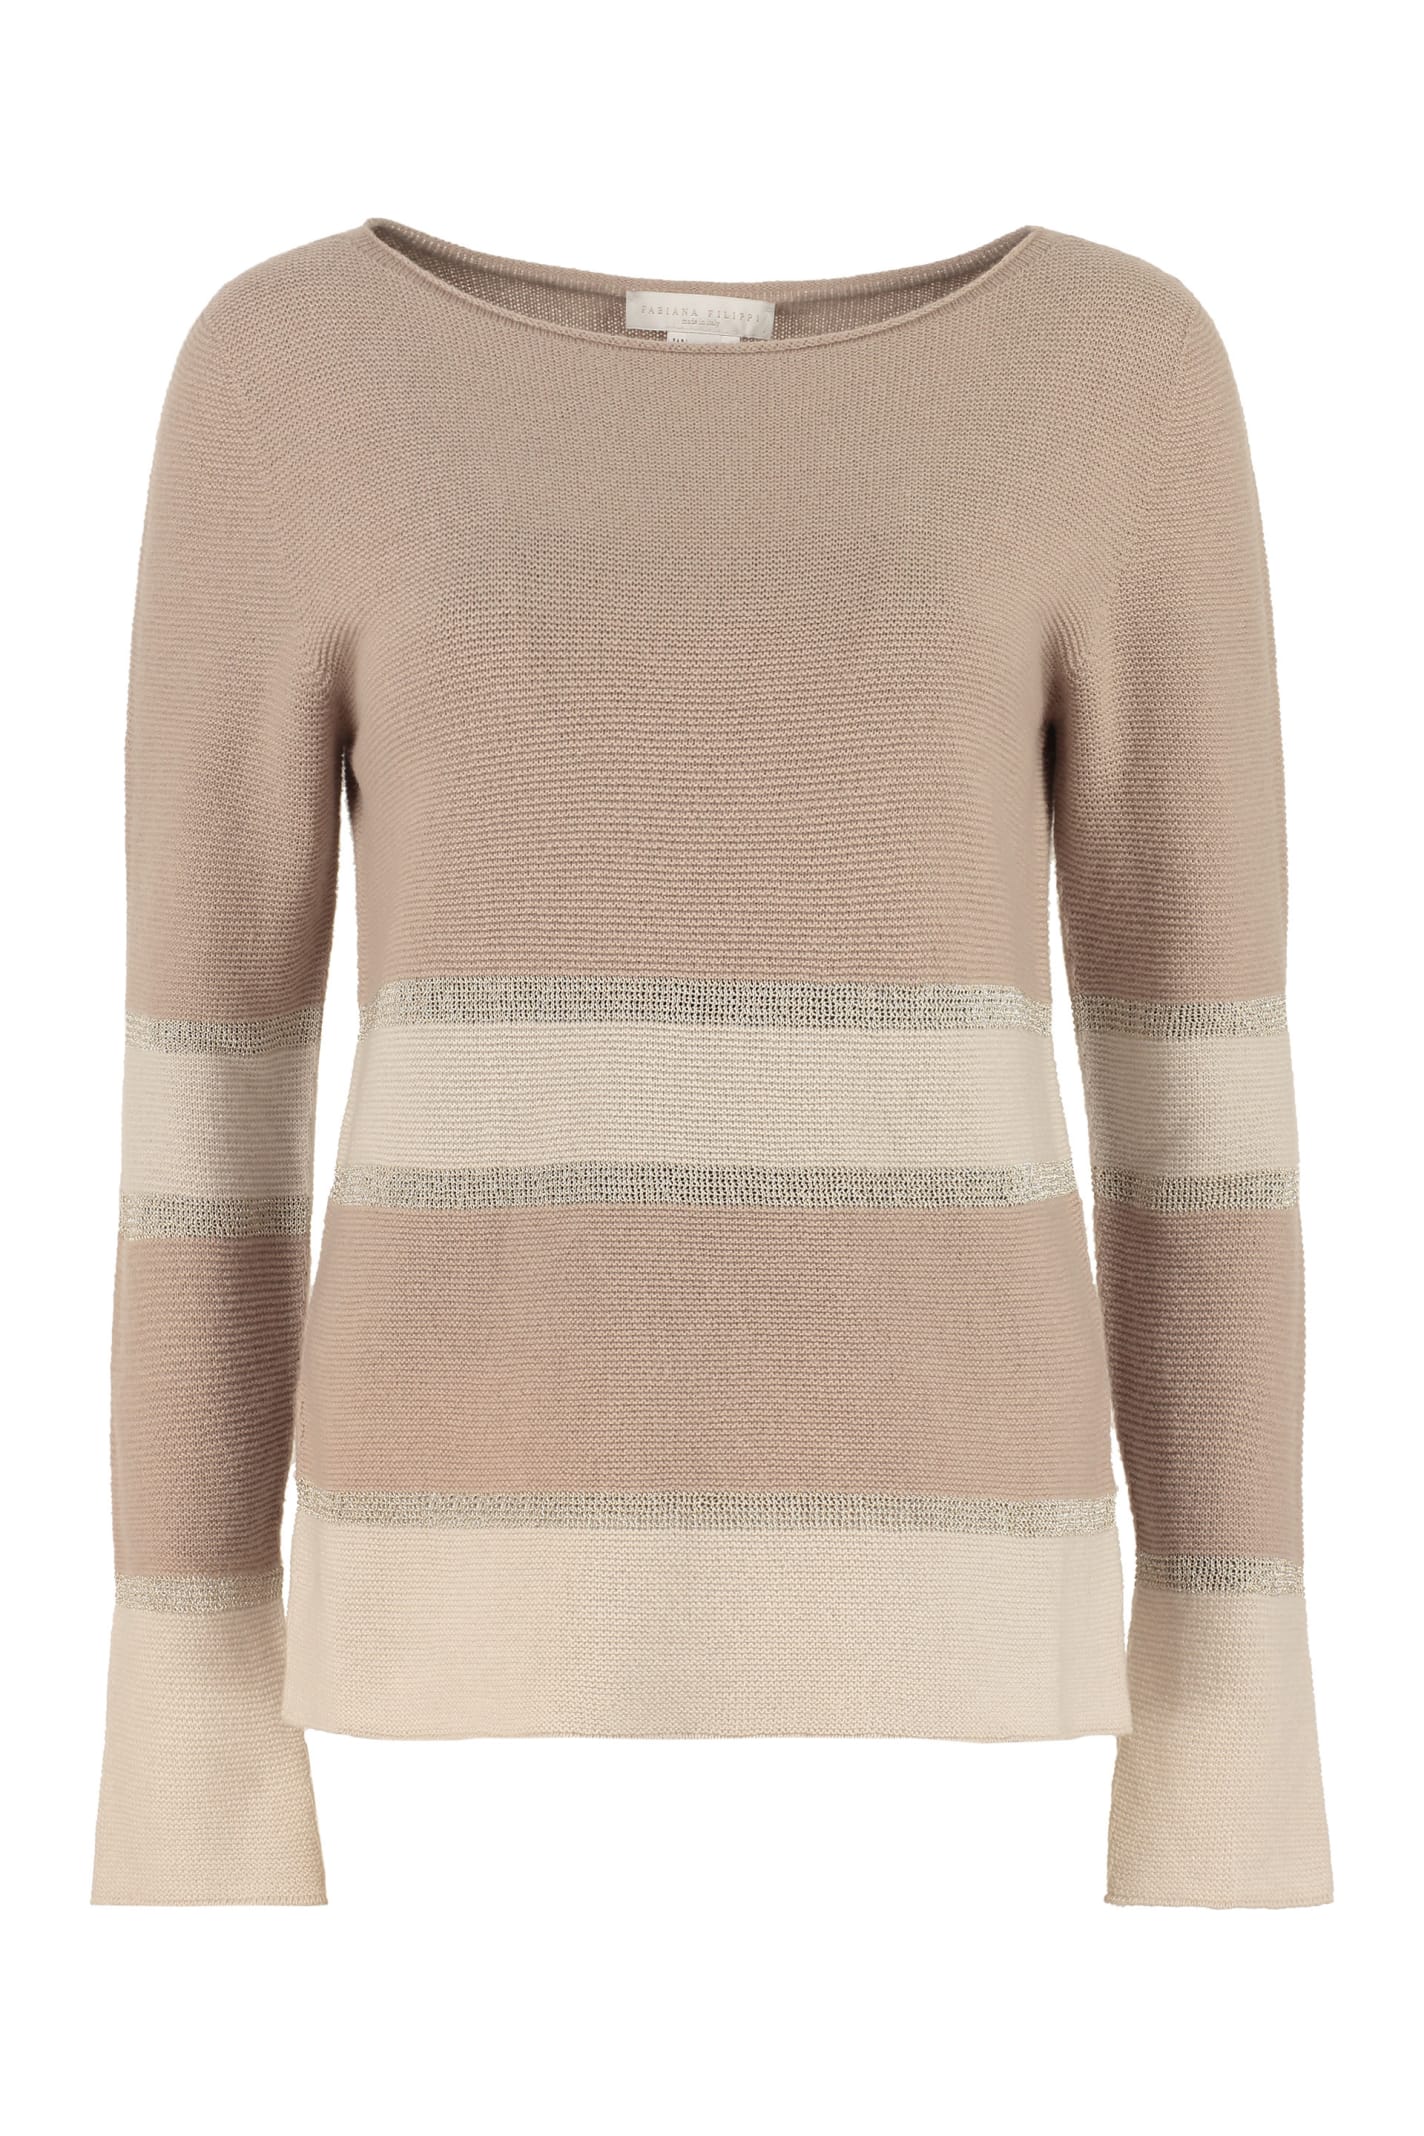 Fabiana Filippi Striped Wool-blend Sweater